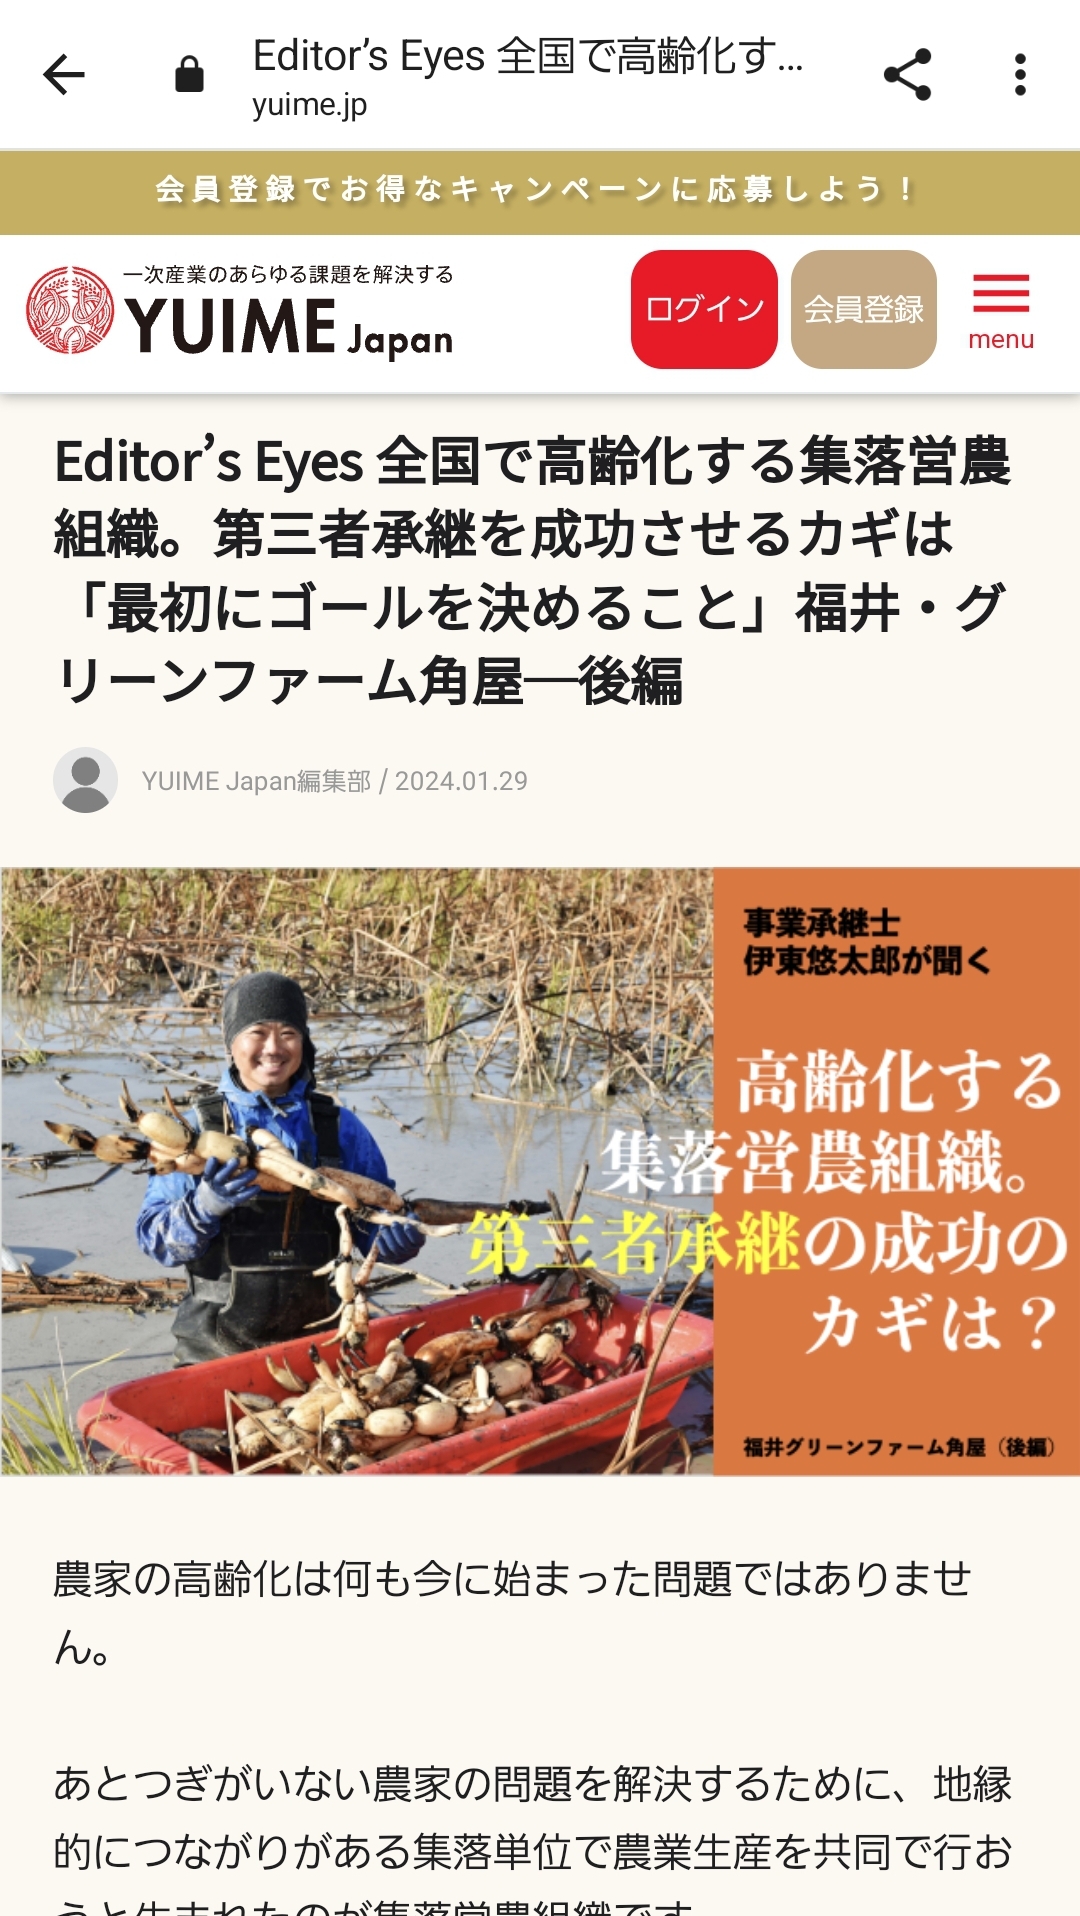 YUIME Japanさんでグリーンファーム角屋の事業承継について記事にしていただきました(後編)